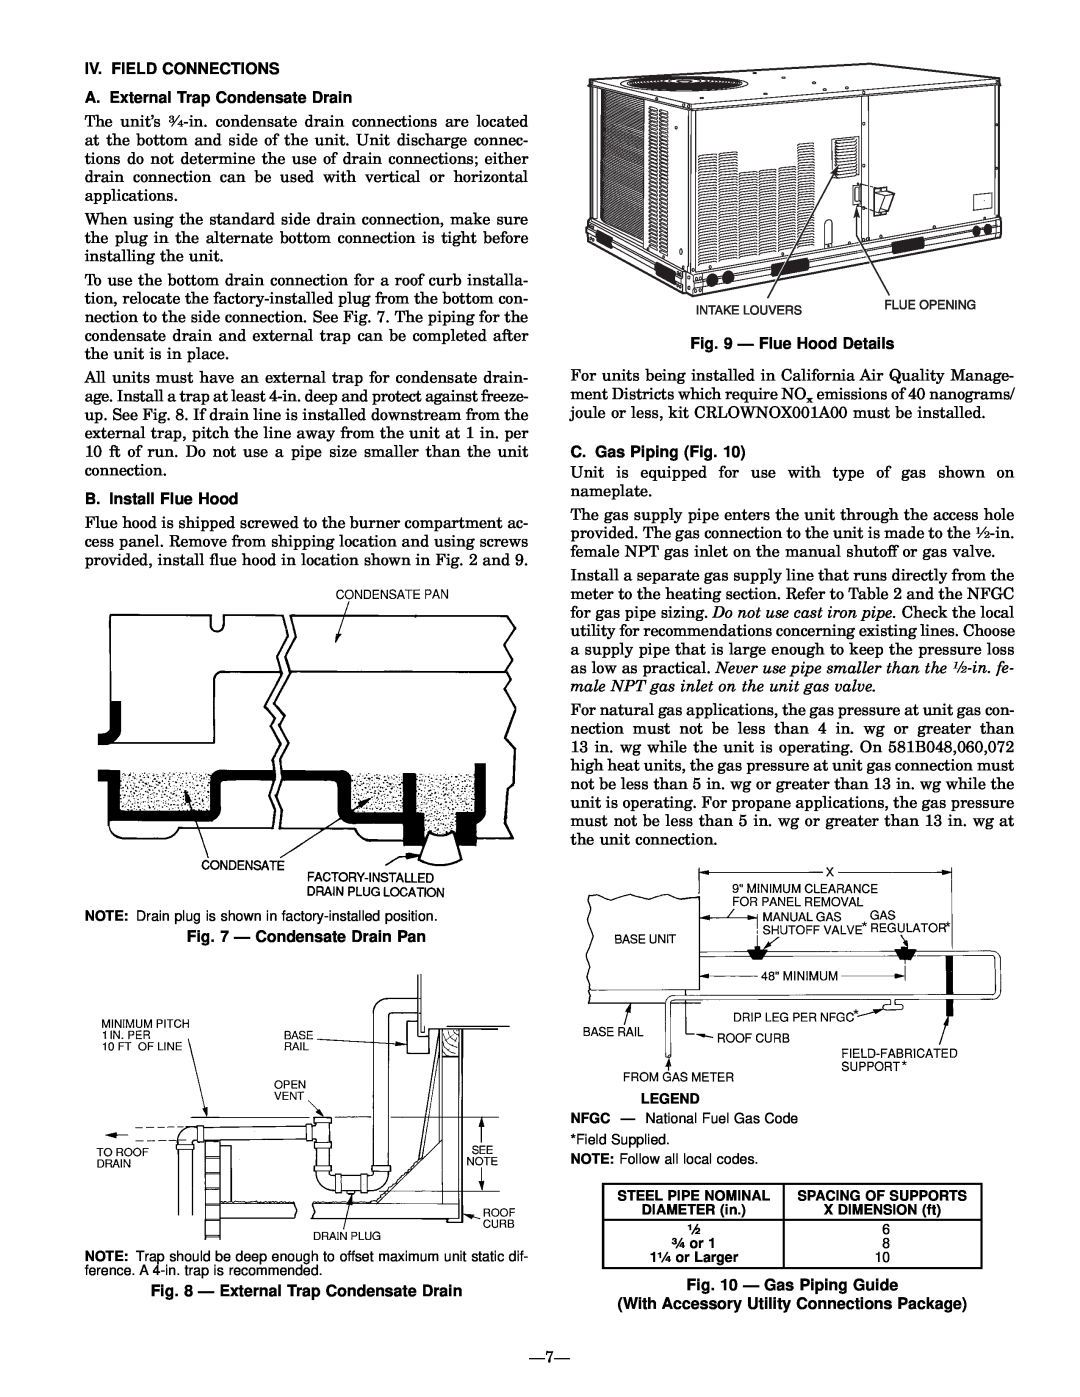 Bryant 581B Iv. Field Connections, A. External Trap Condensate Drain, B. Install Flue Hood, Ð Condensate Drain Pan 